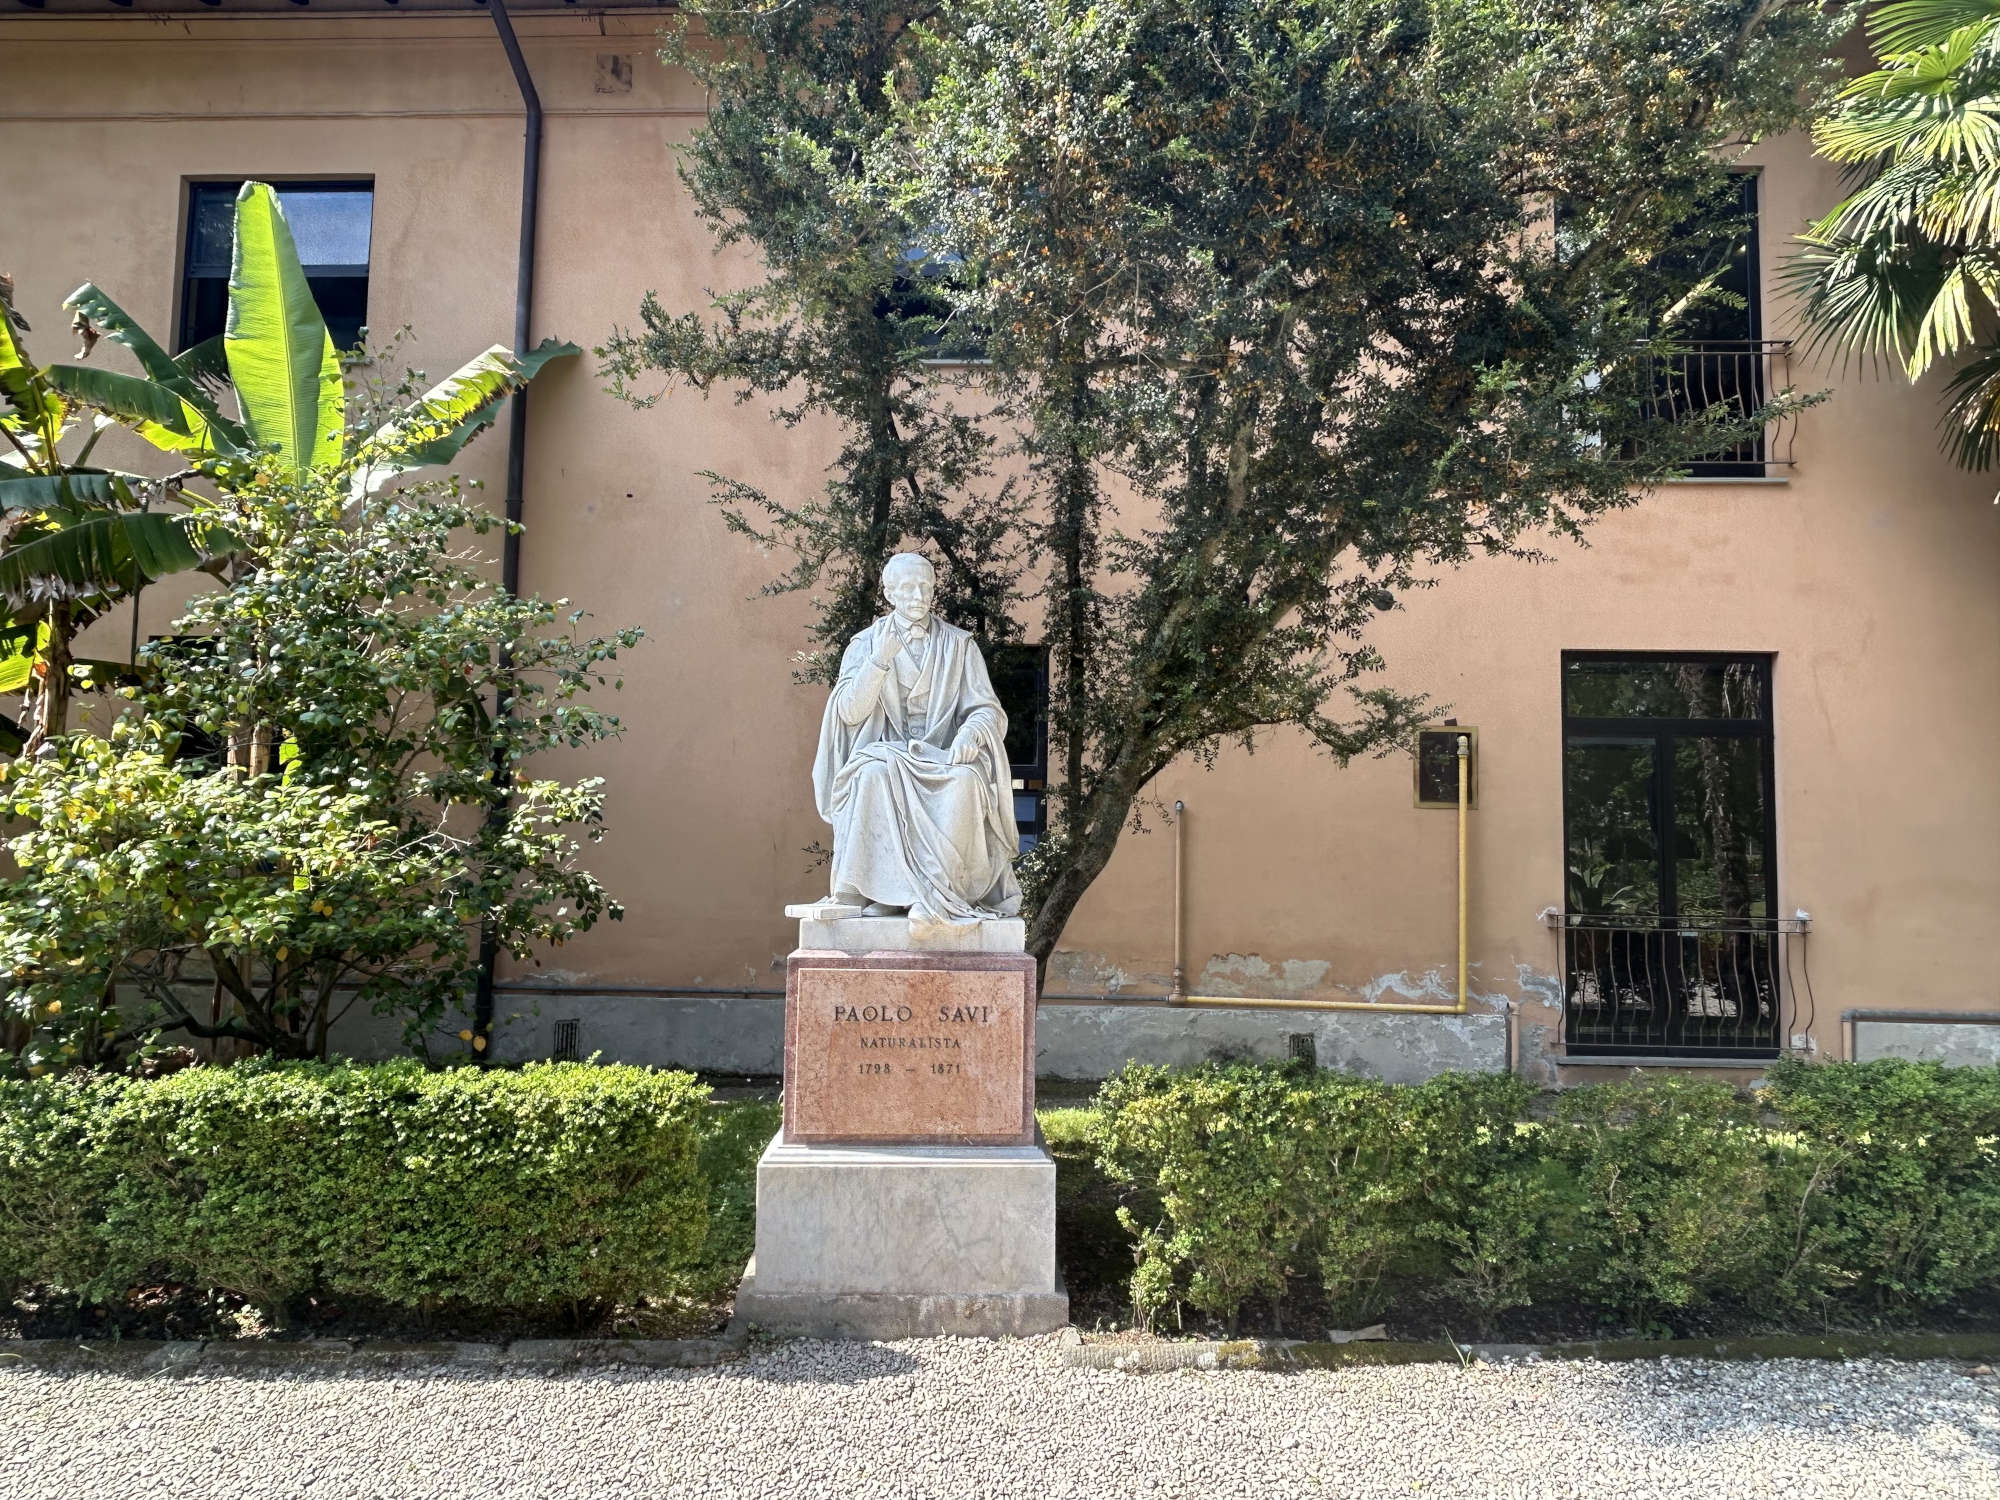 Jardín Botánico de Pisa